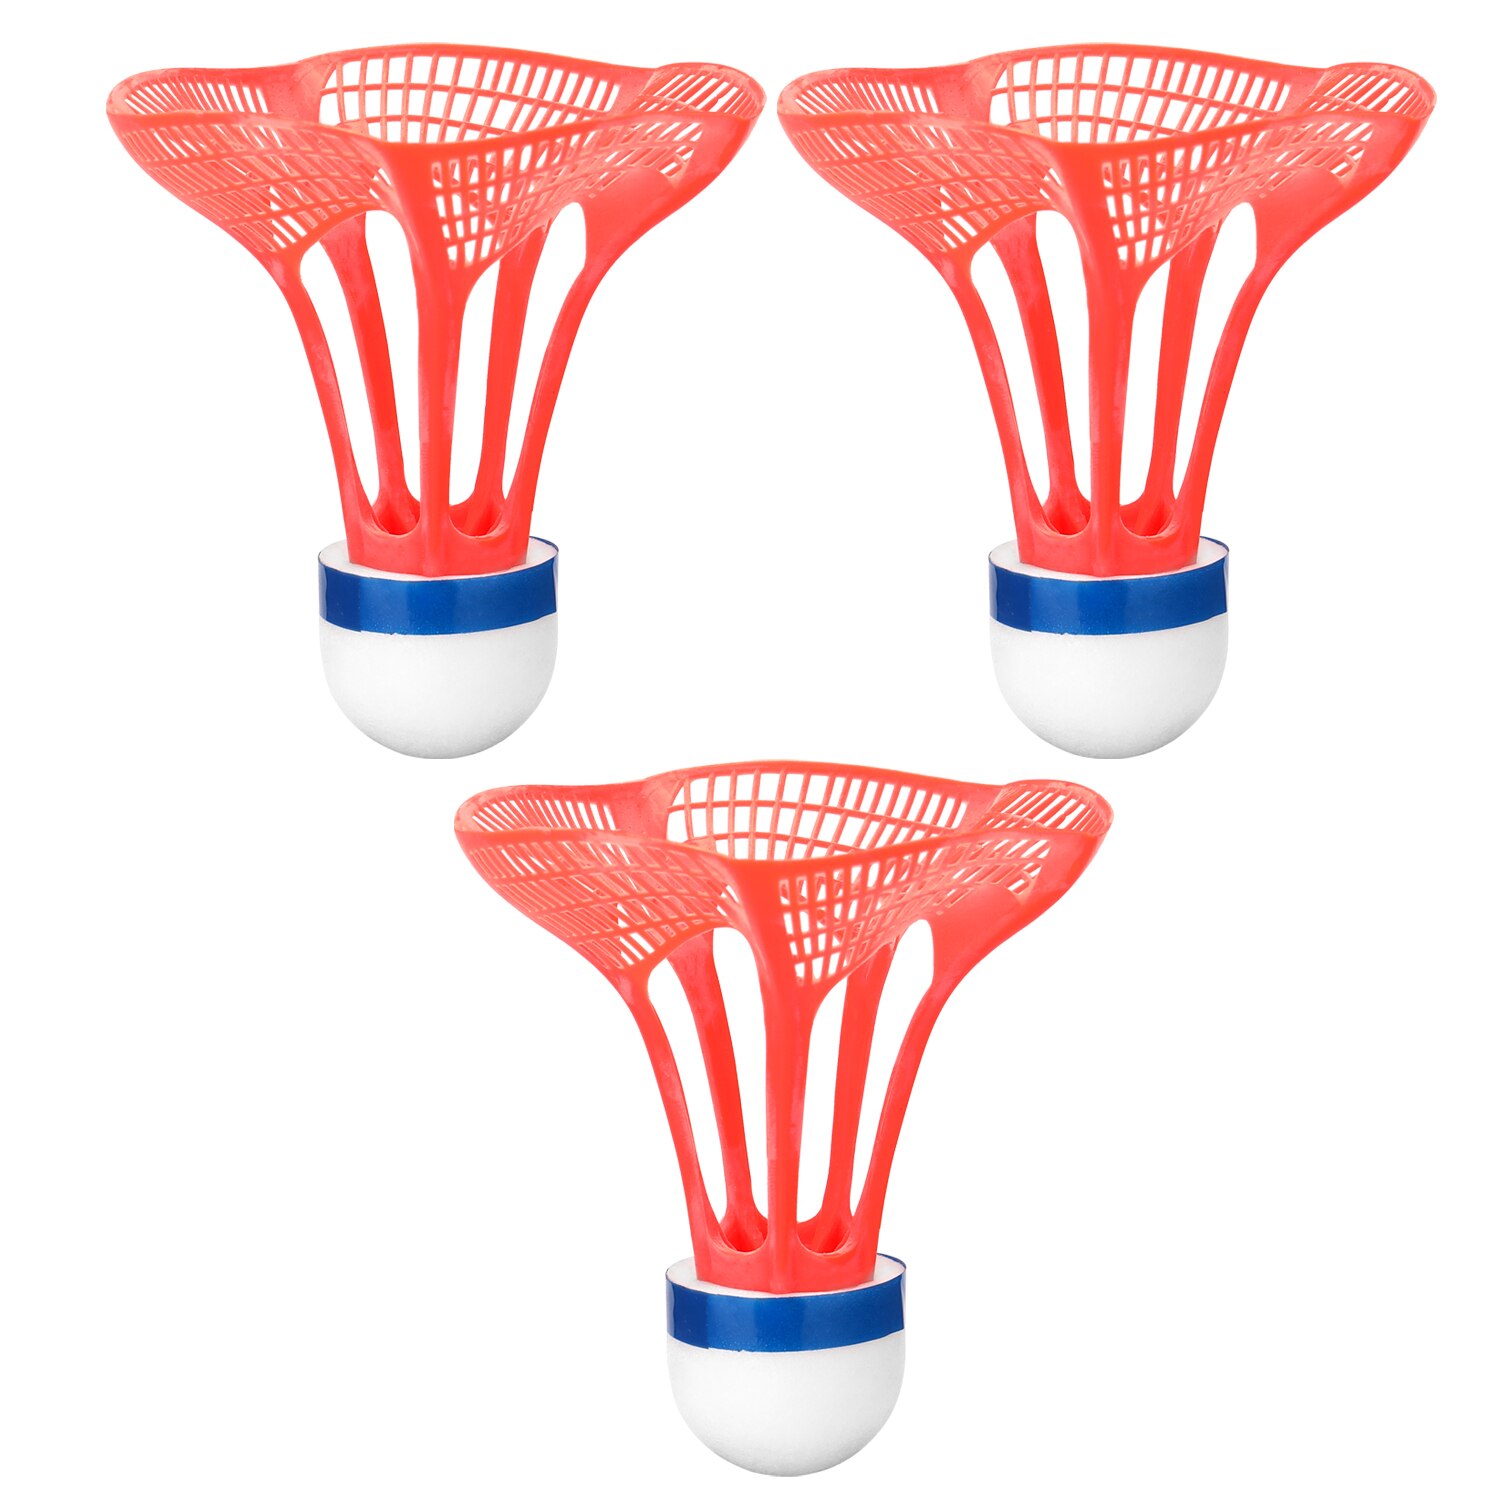 Originale airshuttle udendørs badminton airshuttle plastkugle nylon fjerball kugle stabil modstand 3 stk / pakke: Rød